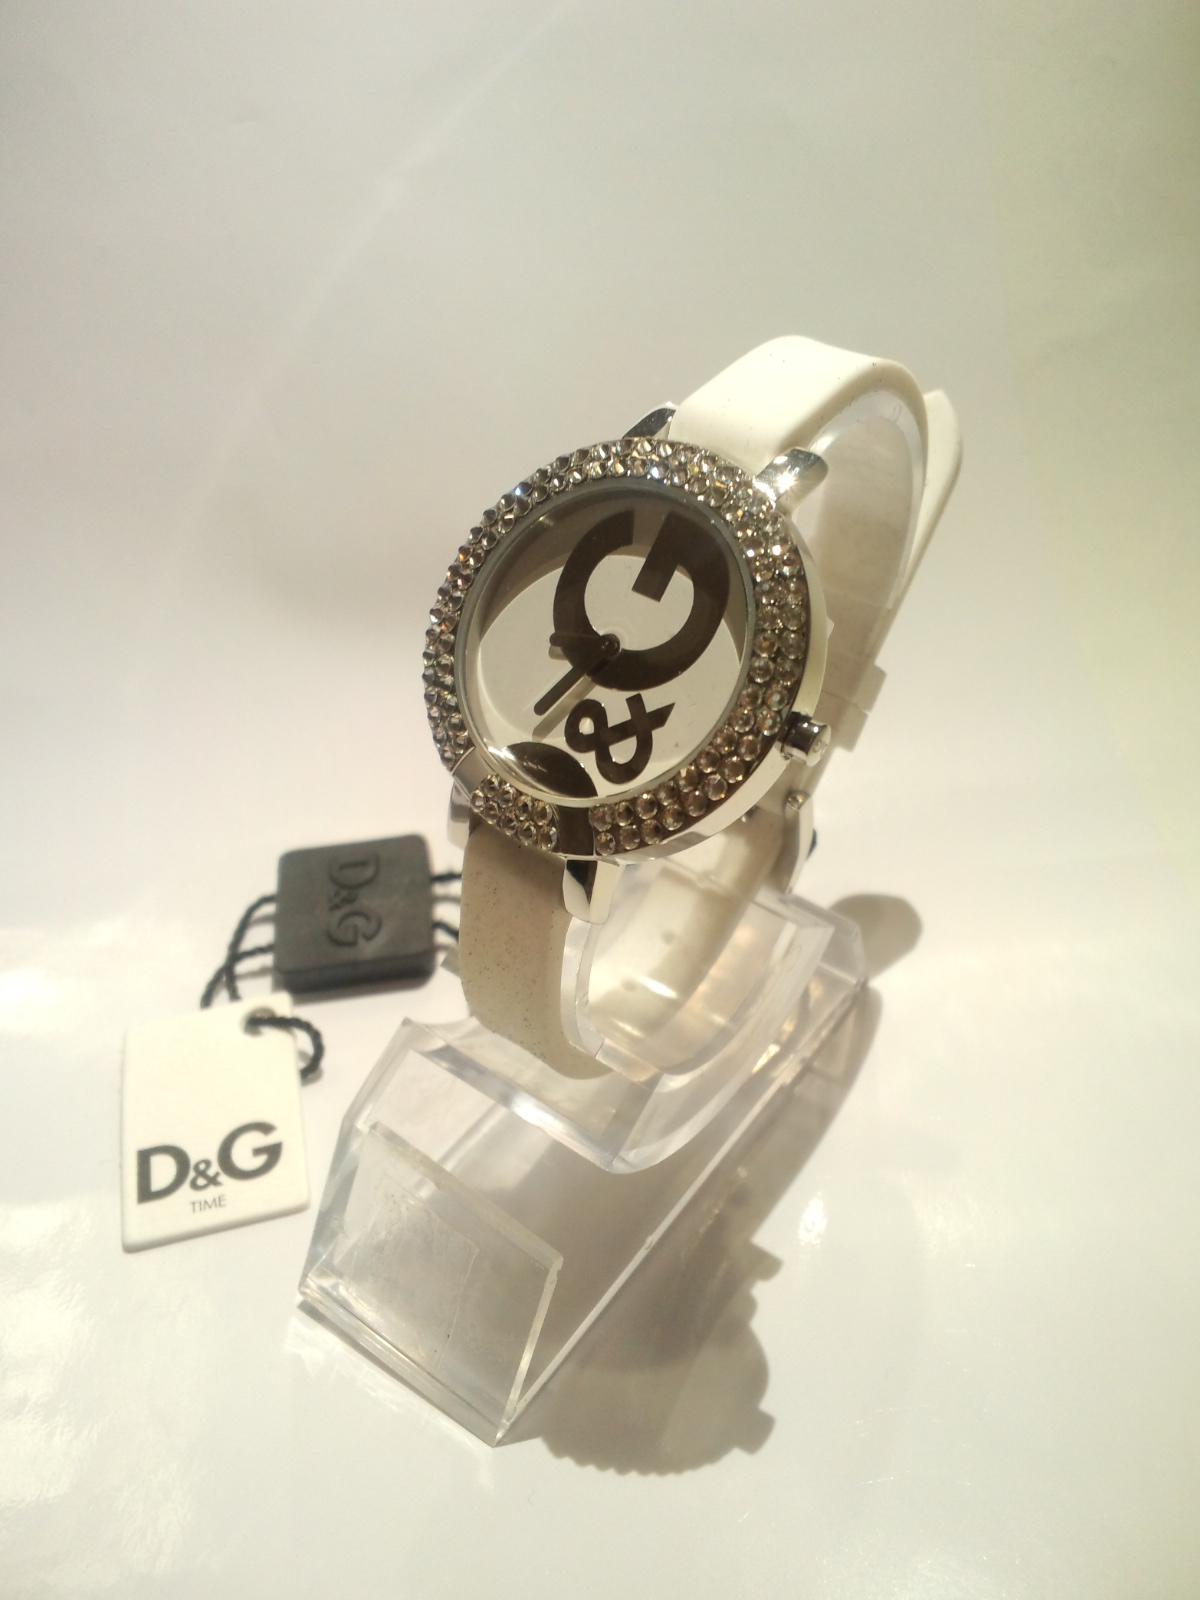 D&G 腕時計 デコ ホワイト | ファストルックス